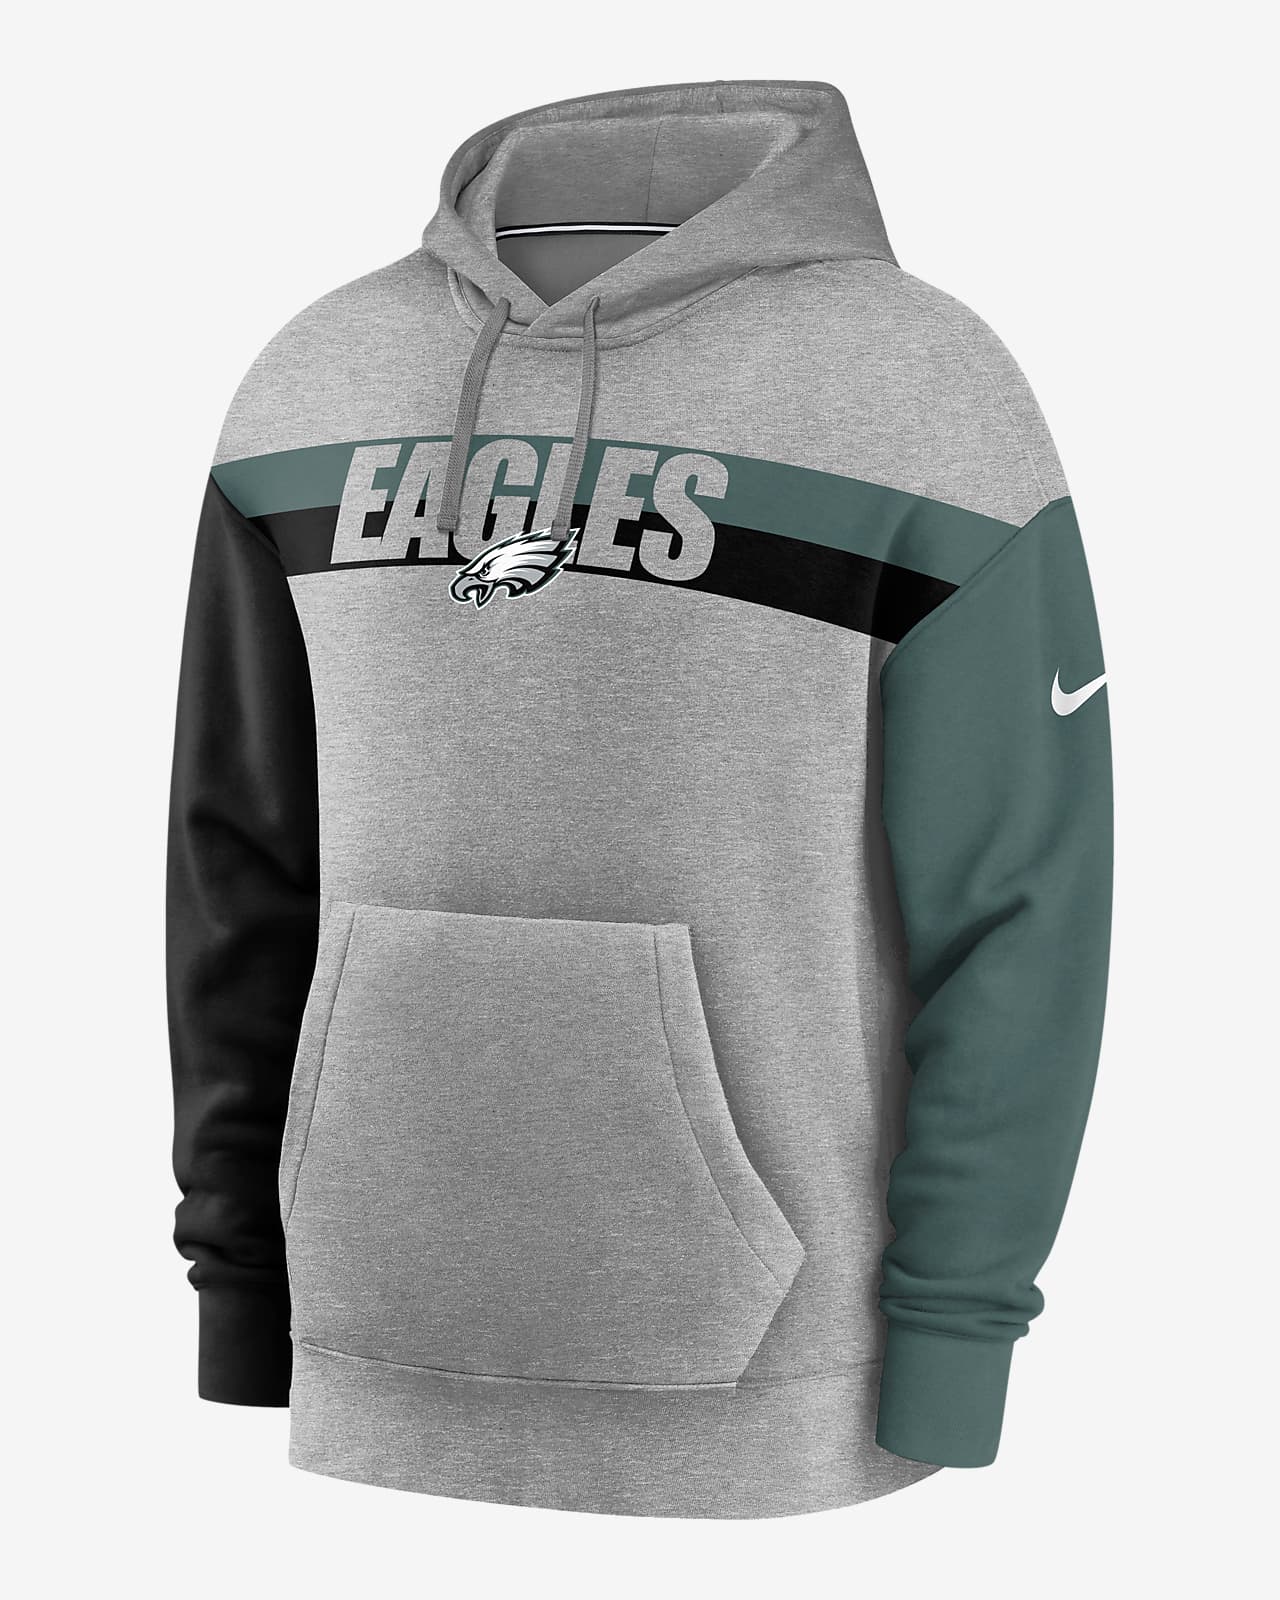 eagles nike sideline jacket